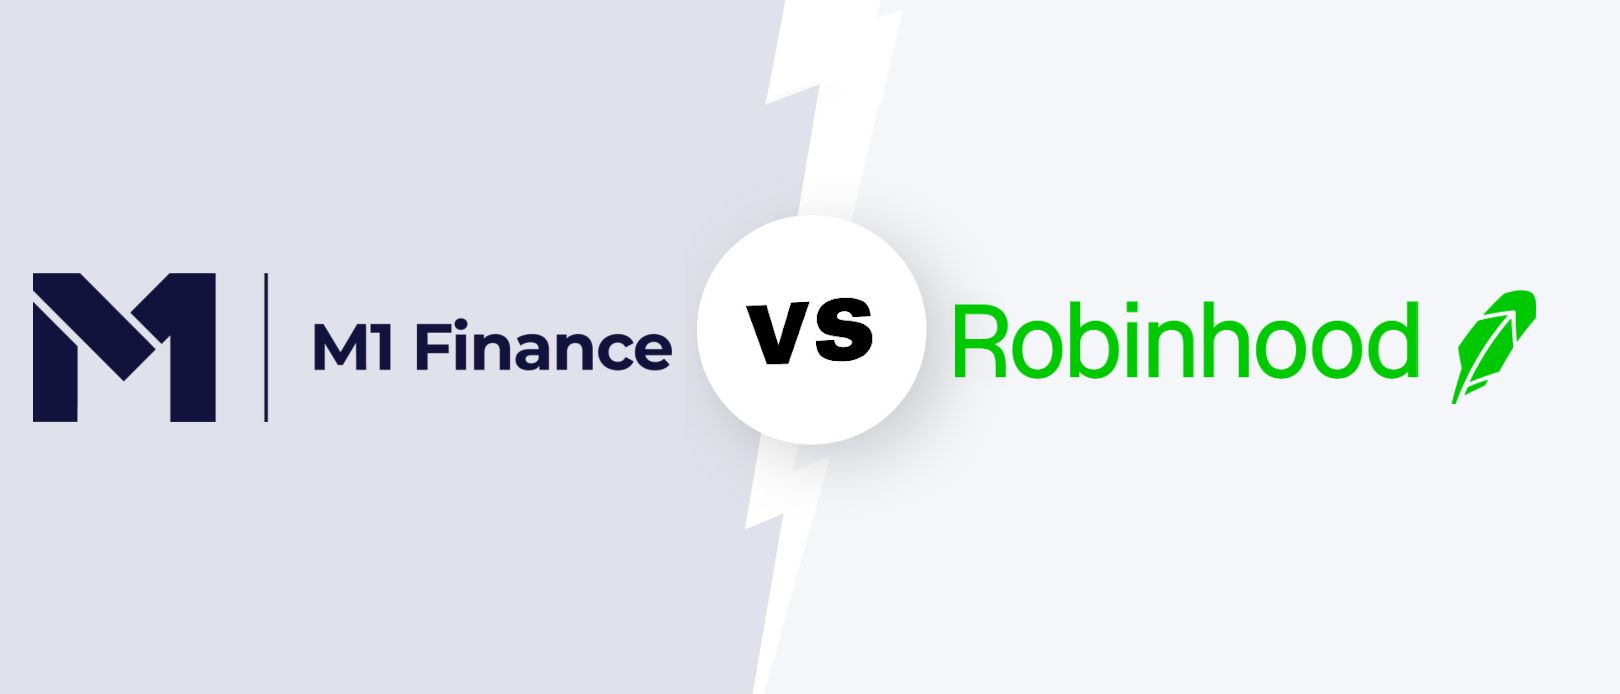 Comparing M1 Finance vs. Robinhood